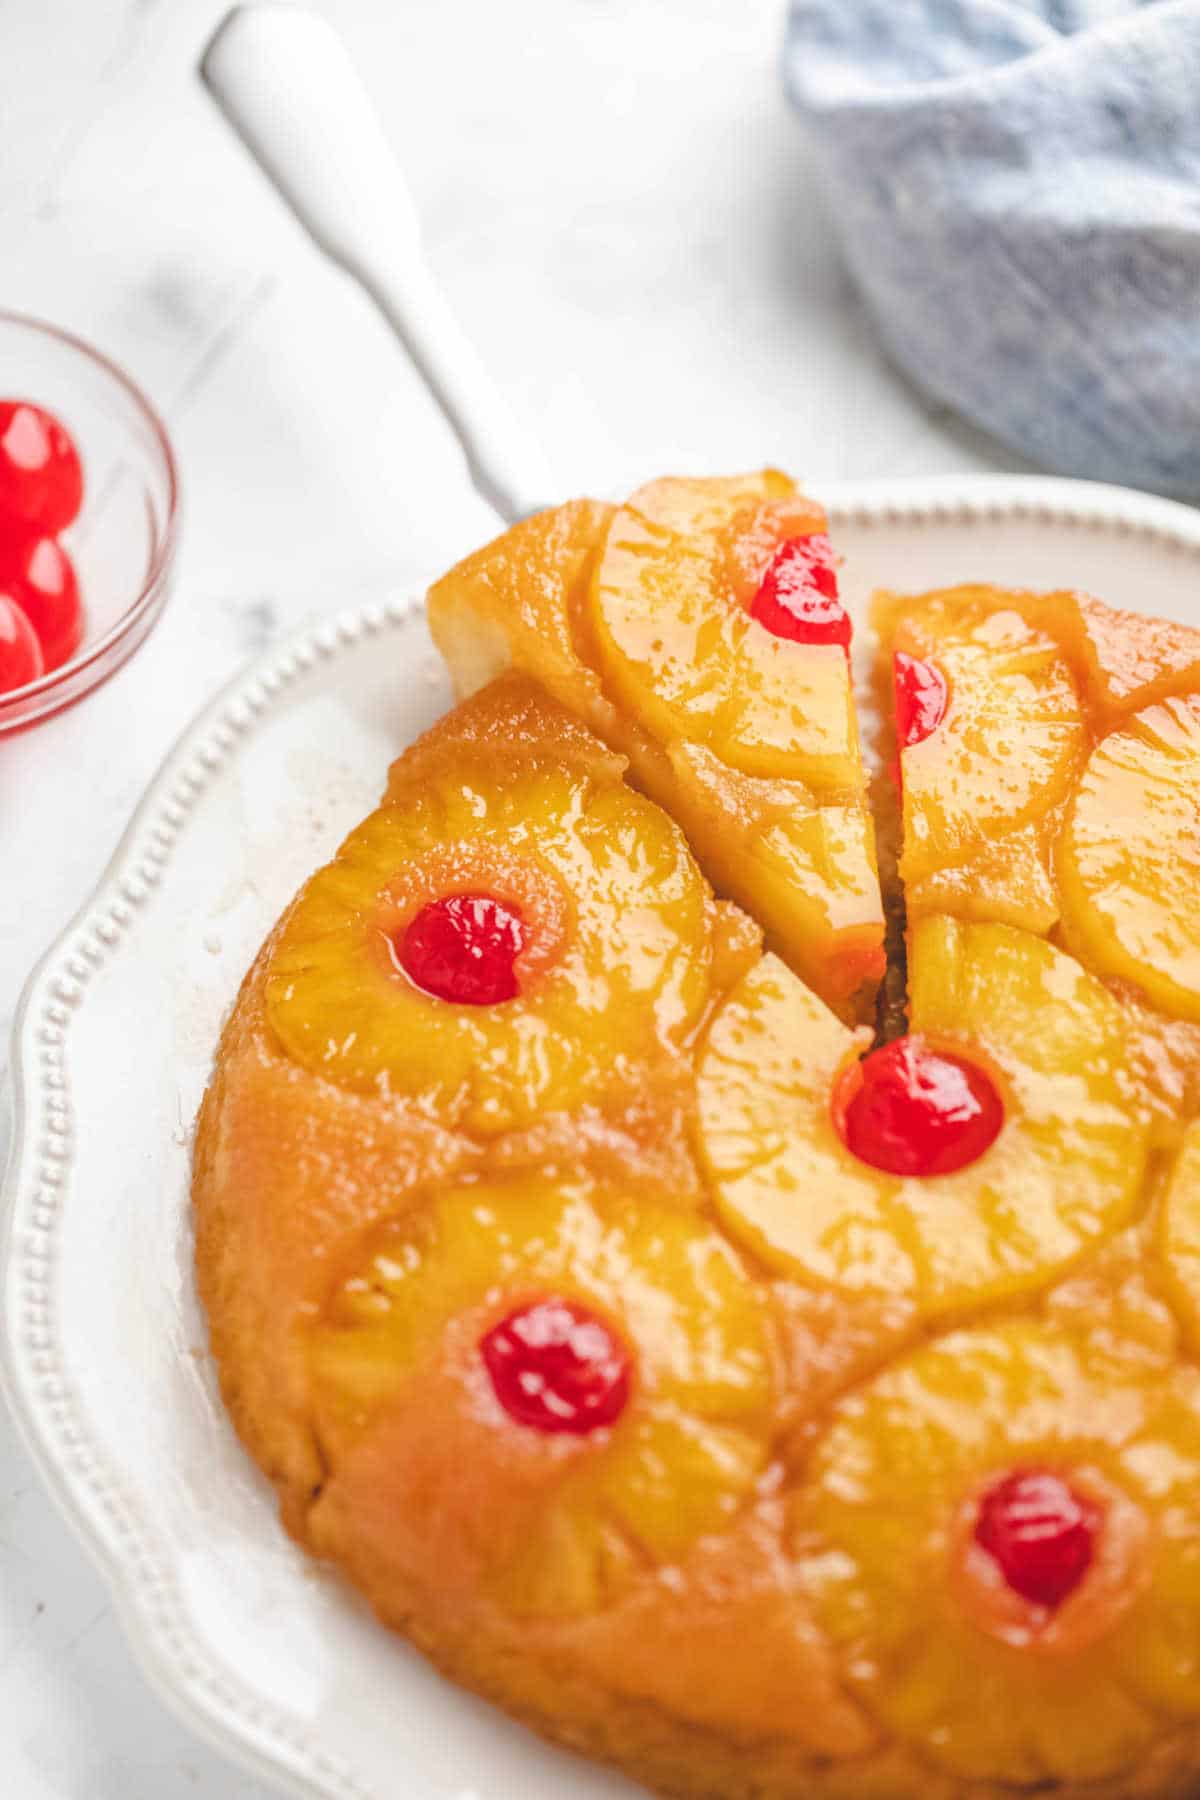 A pineapple upside down cake next to a bowl of maraschino cherries.